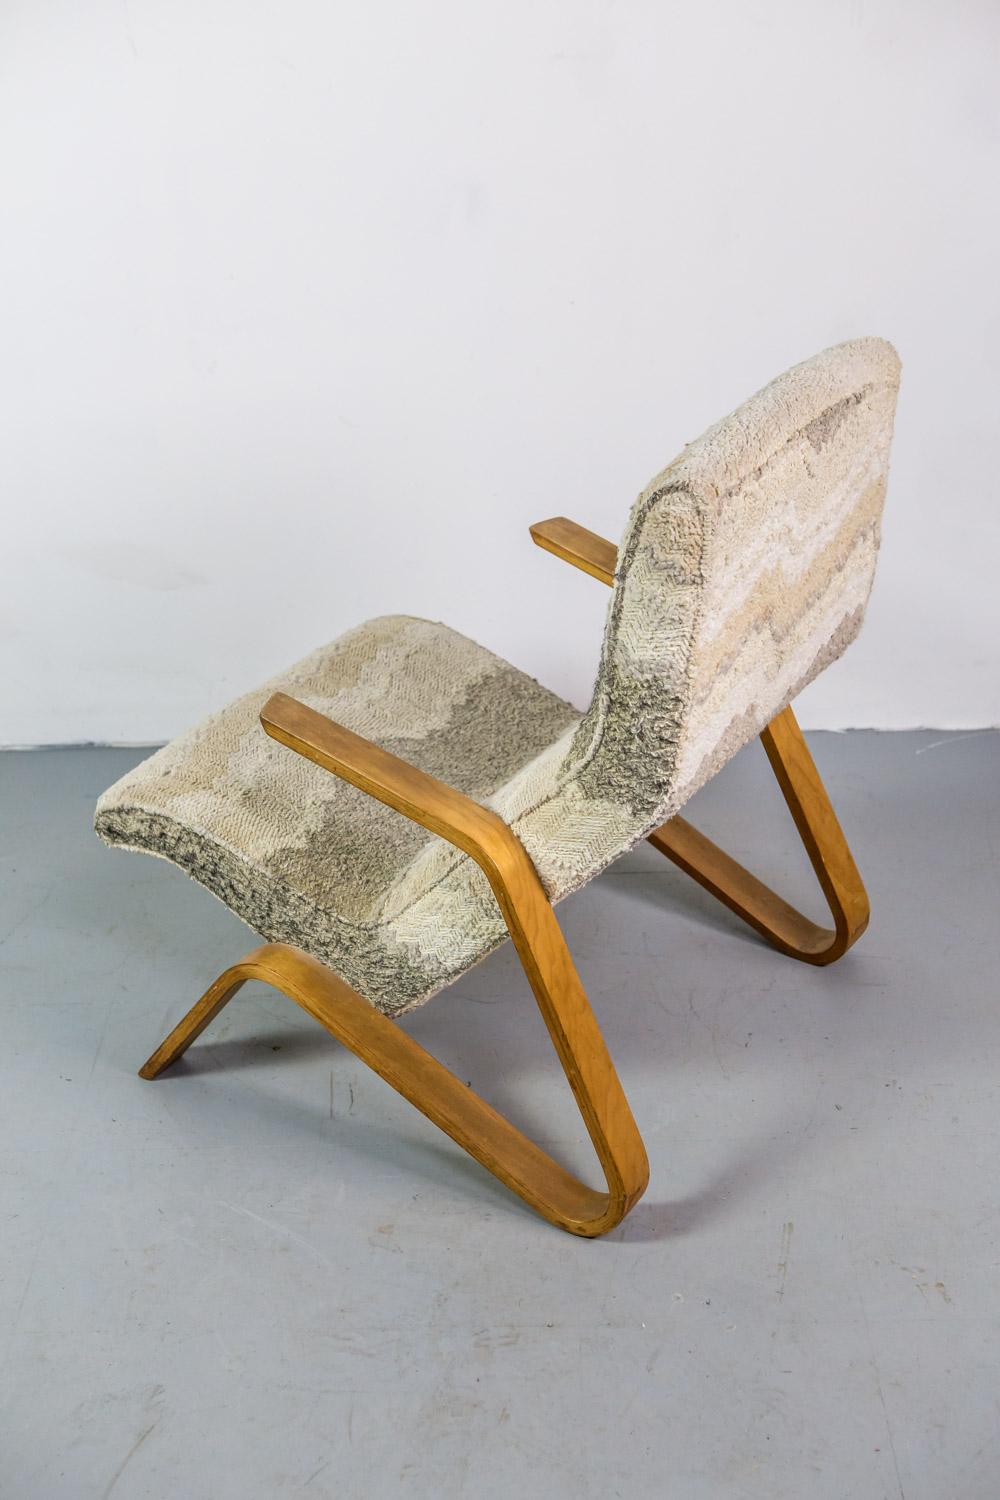 Early Grasshopper Chair by Eero Saarinen for Knoll (Mitte des 20. Jahrhunderts)